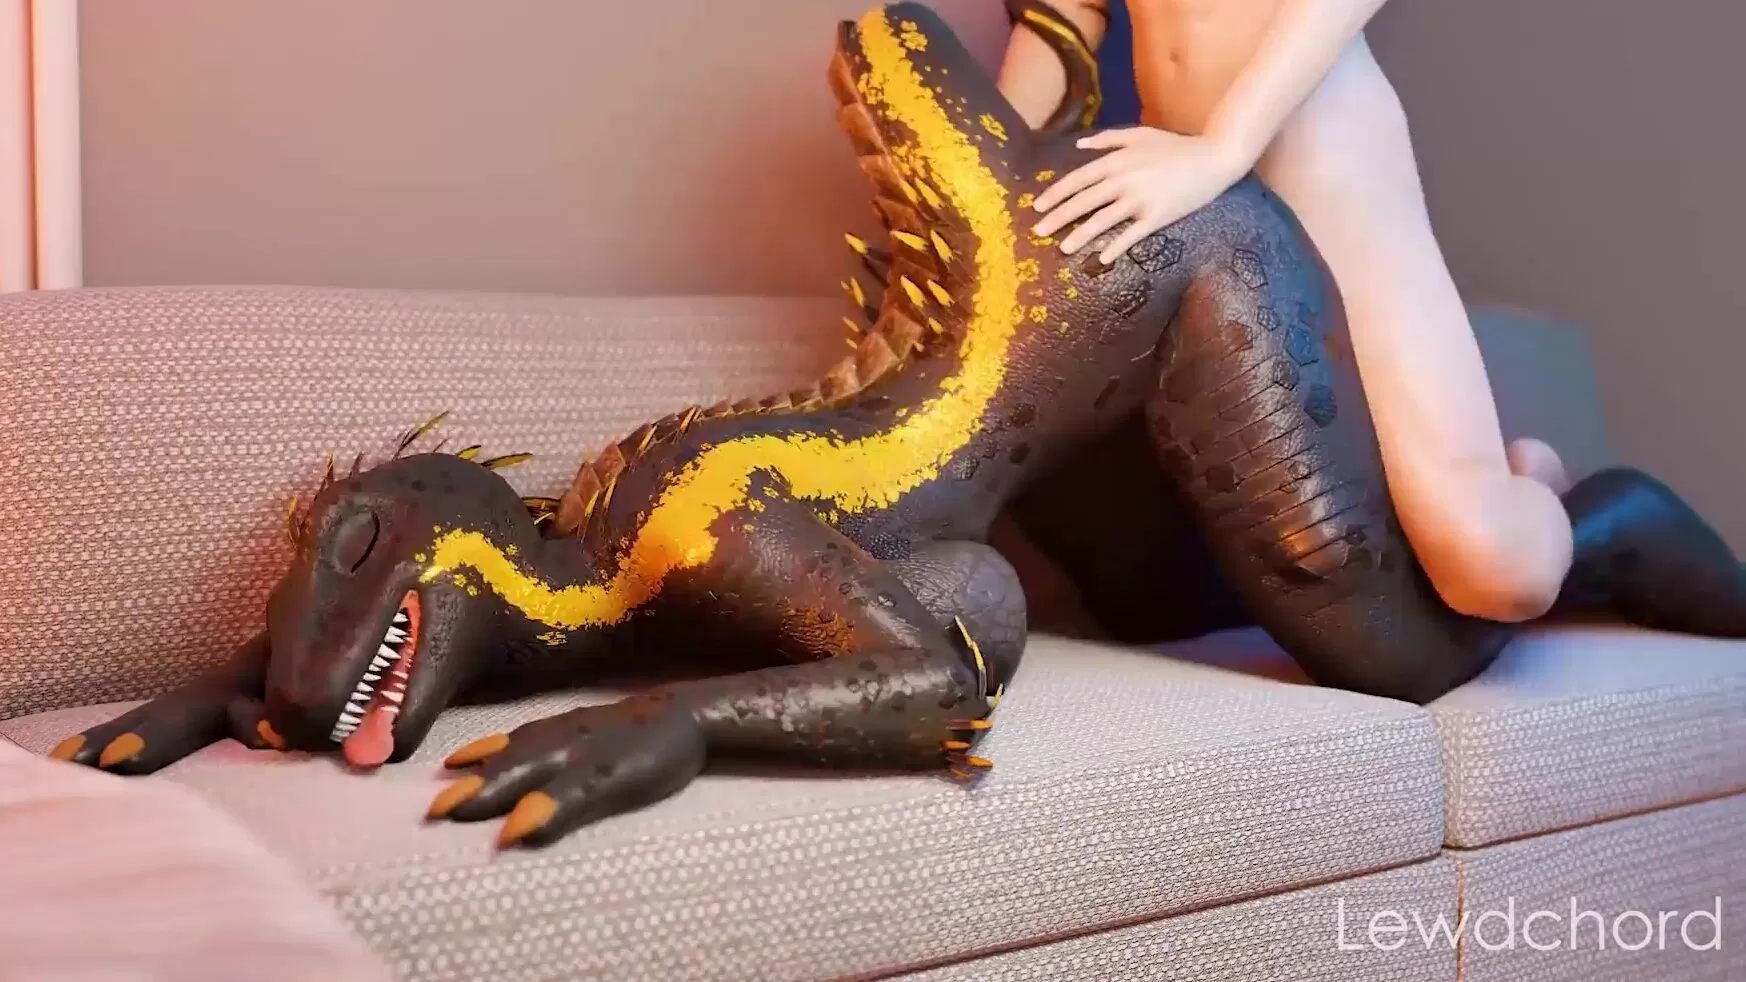 Furry Girl Sex 3d Anime Porn - Hot 3D Furry Porn: Sexy Busty Lizard-girl Gets Doggy-fucked By a Man On the  Sofa